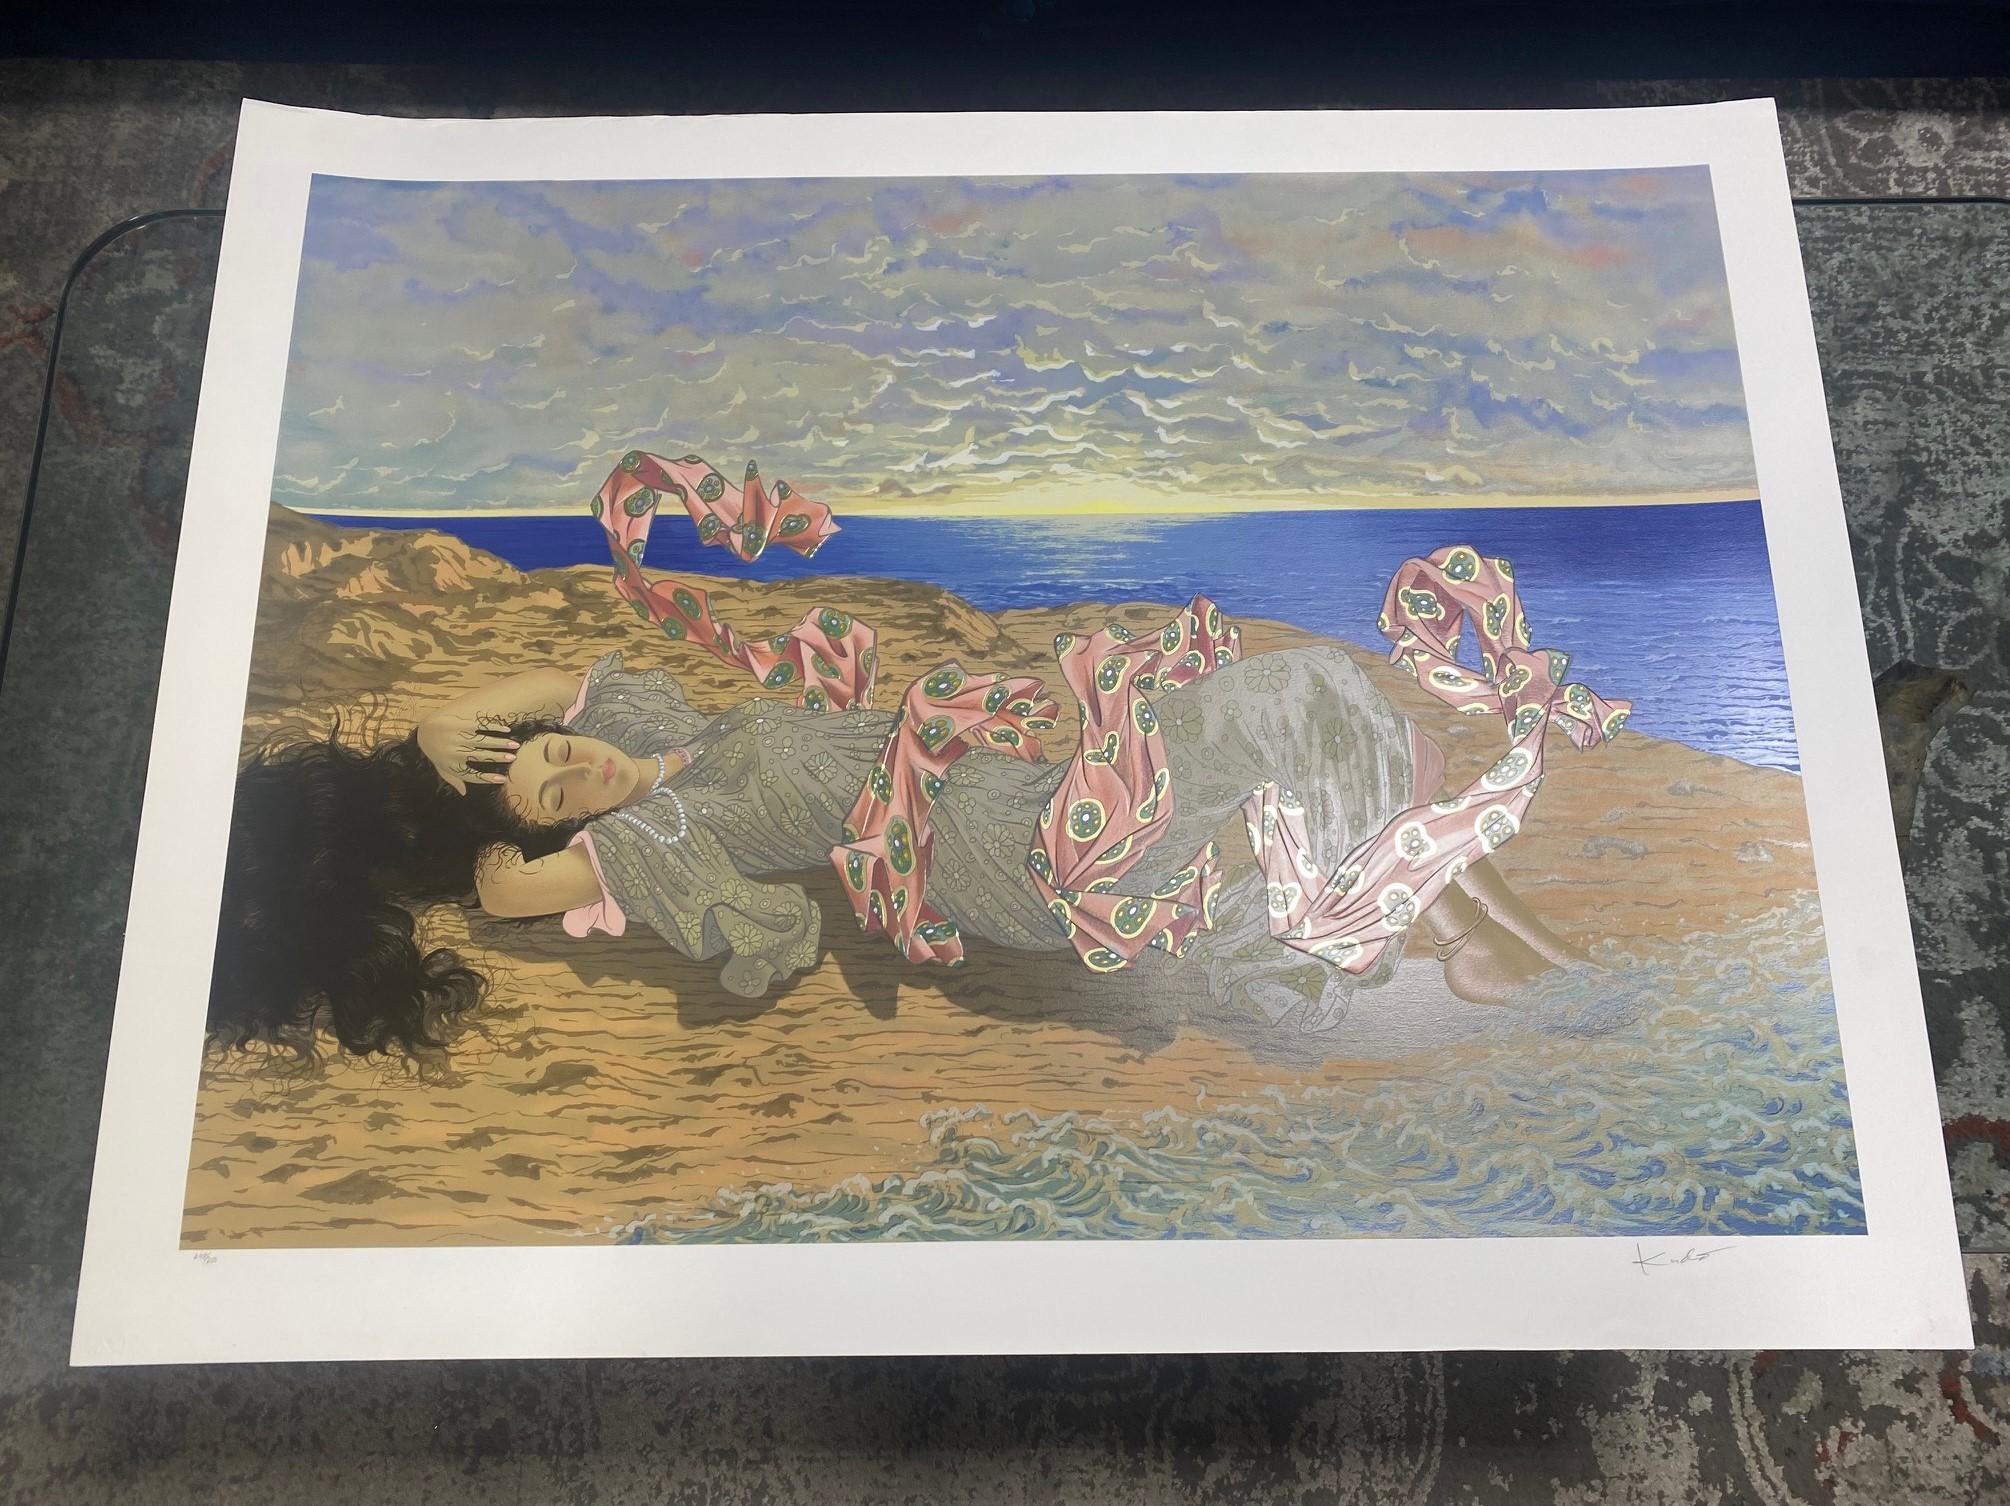 A beautiful and engaging large limited edition serigraph print by Japanese artist/print master Muramasa Kudo (1948-) titled 